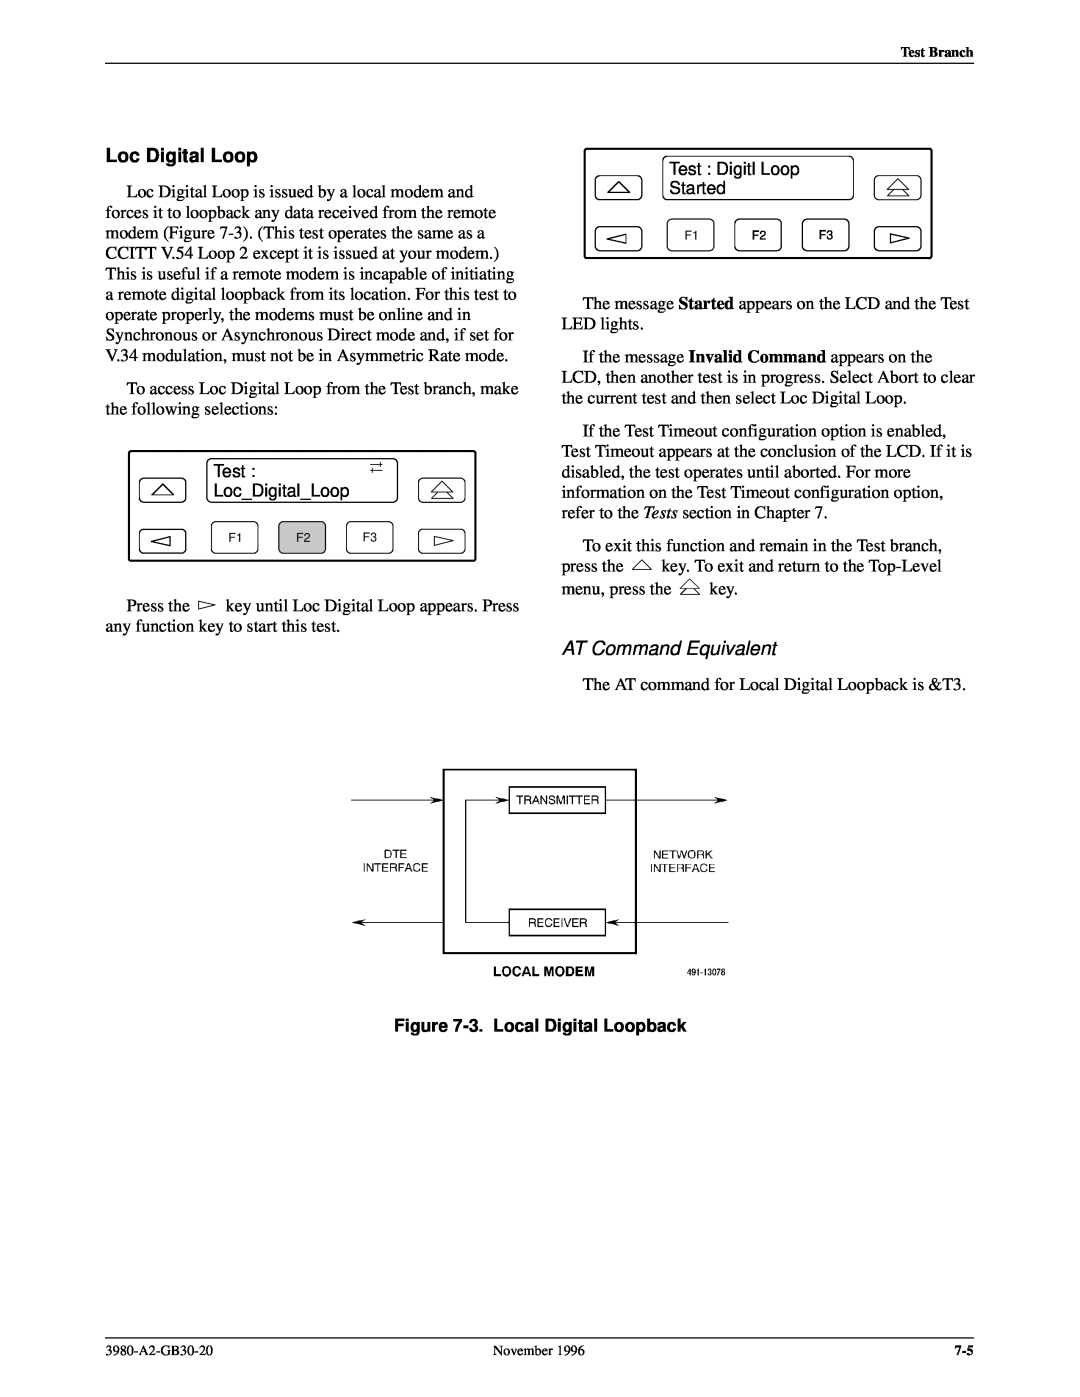 Paradyne 3800PLUS manual Loc Digital Loop, 3. Local Digital Loopback, AT Command Equivalent 